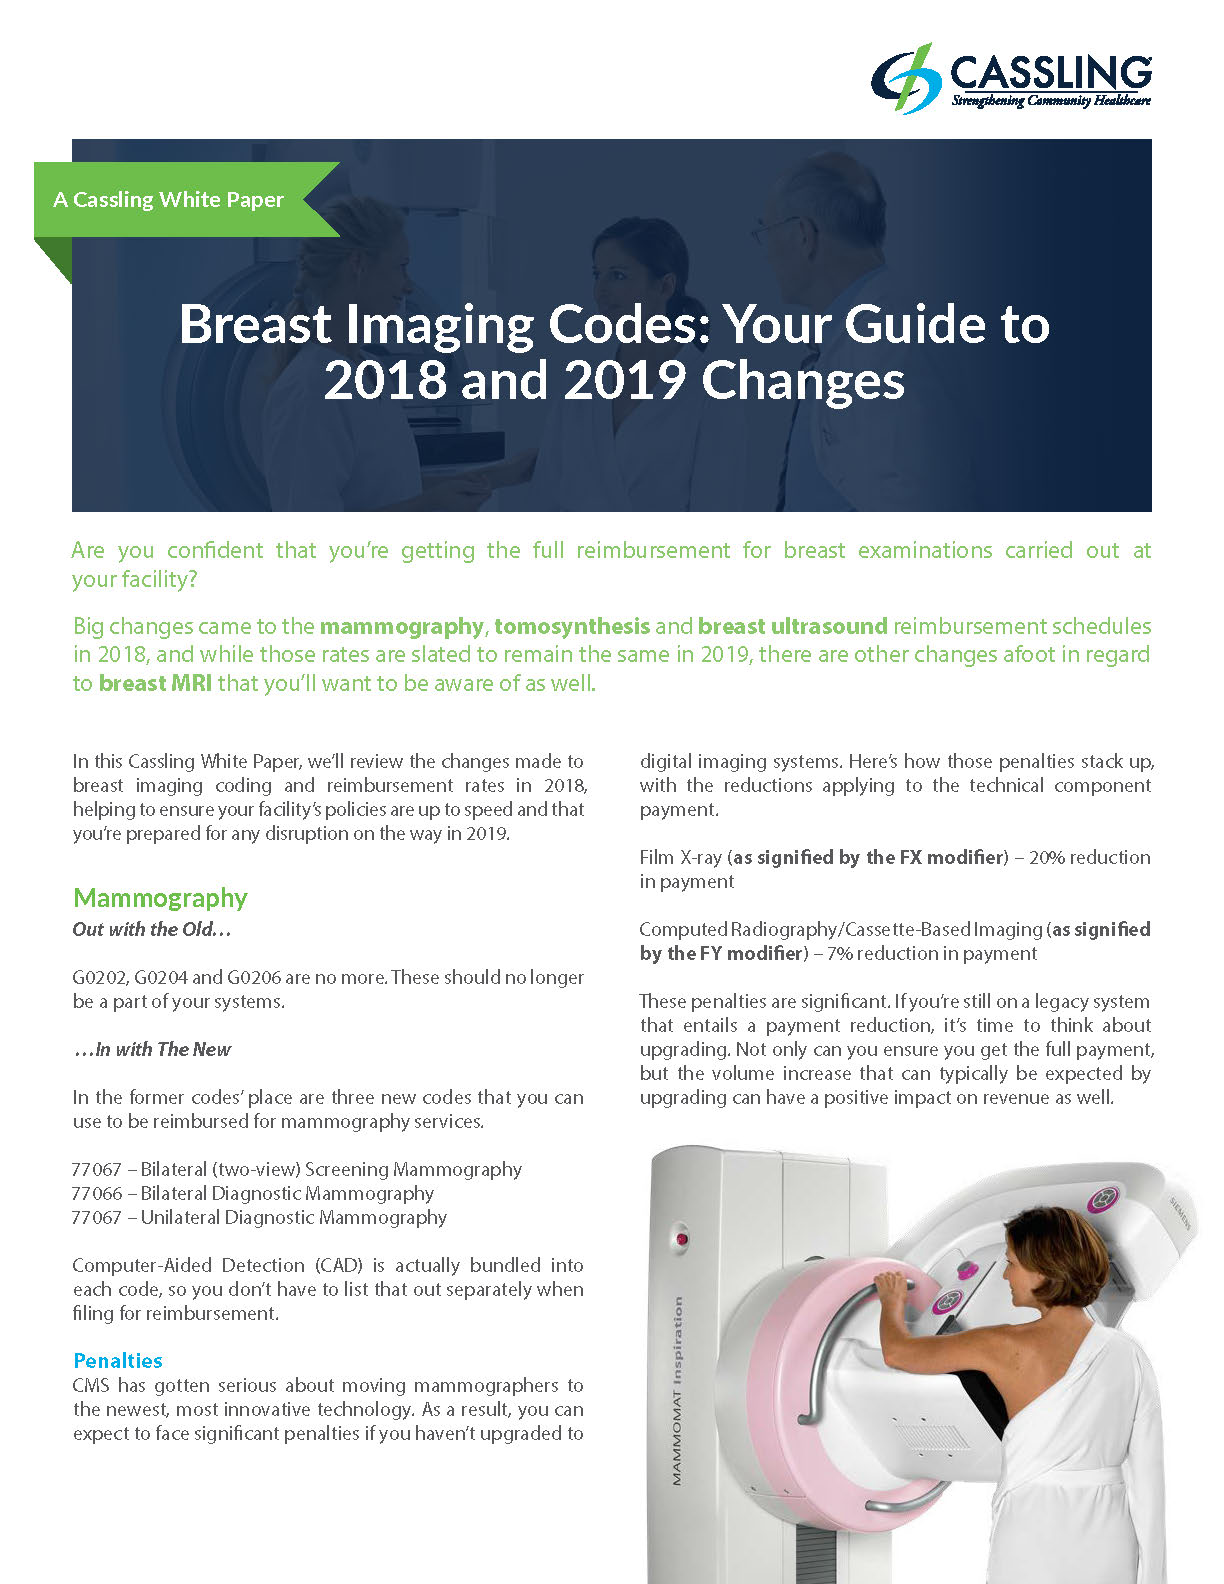 Breast-Imaging-Coding-White-Paper-2018-Cover.jpg